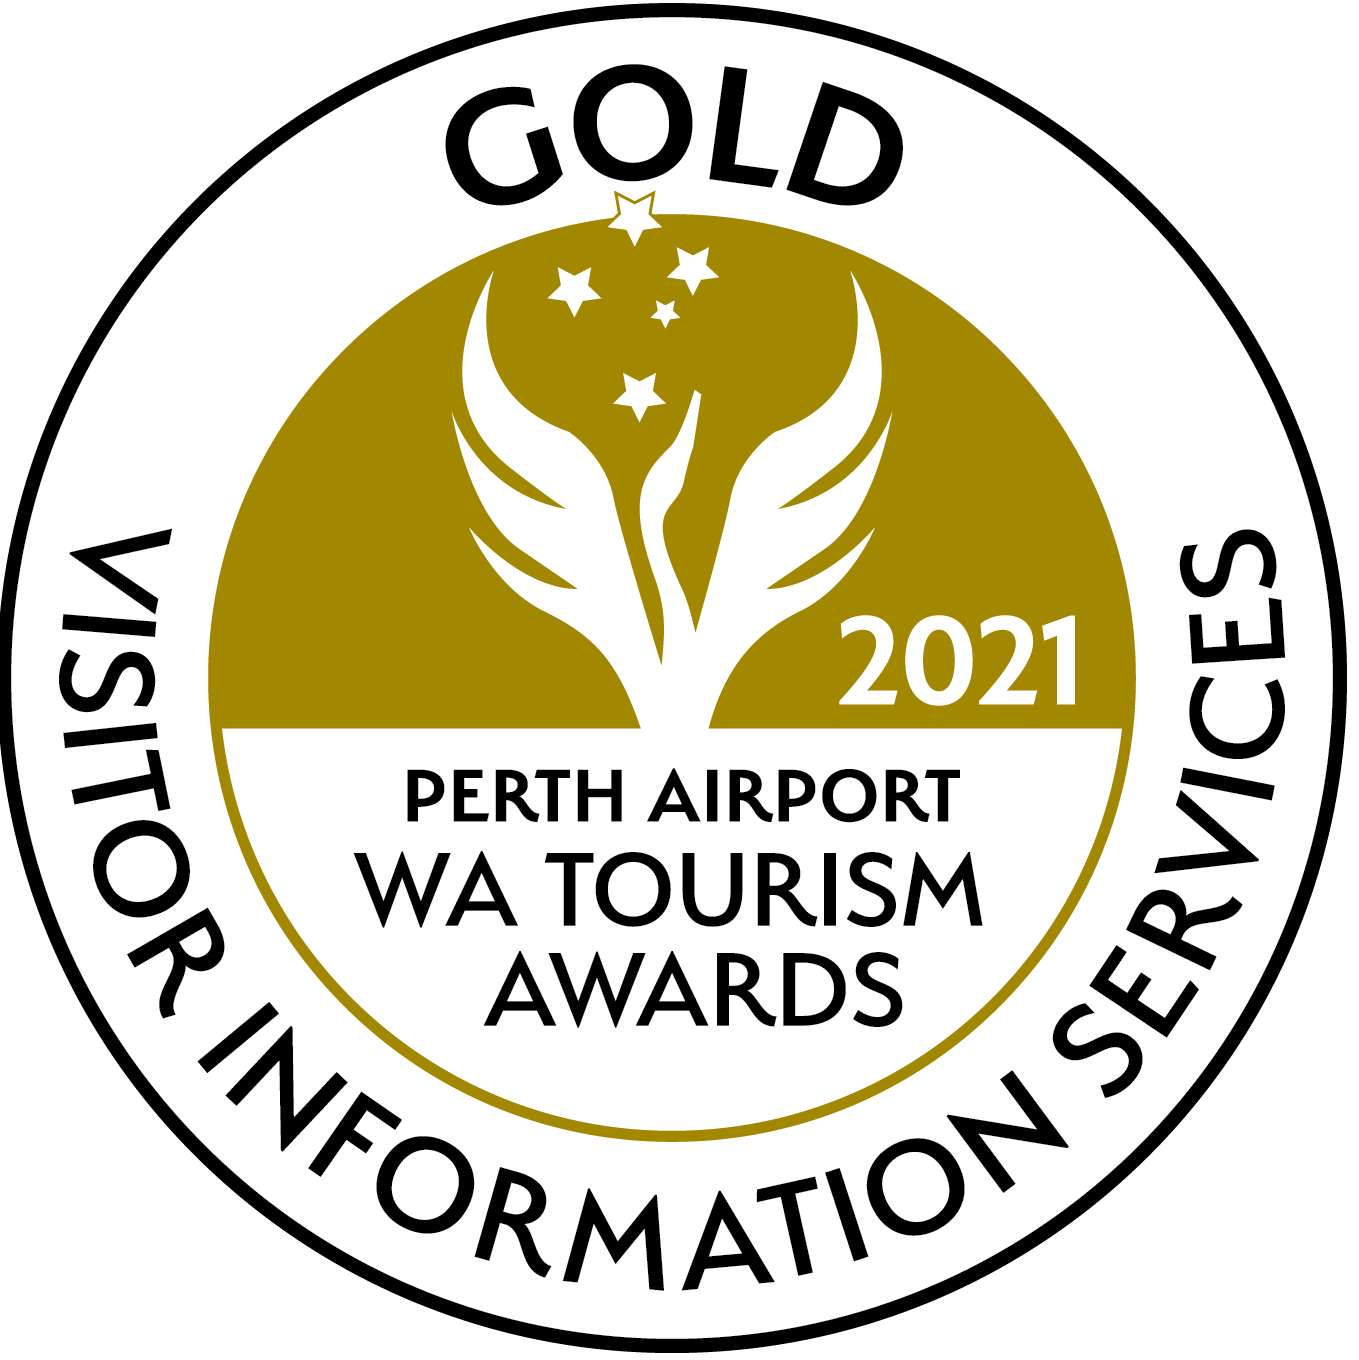 Gold 2021 Perth Airport WA Tourism Award Logo for Visitor Informaiton Services